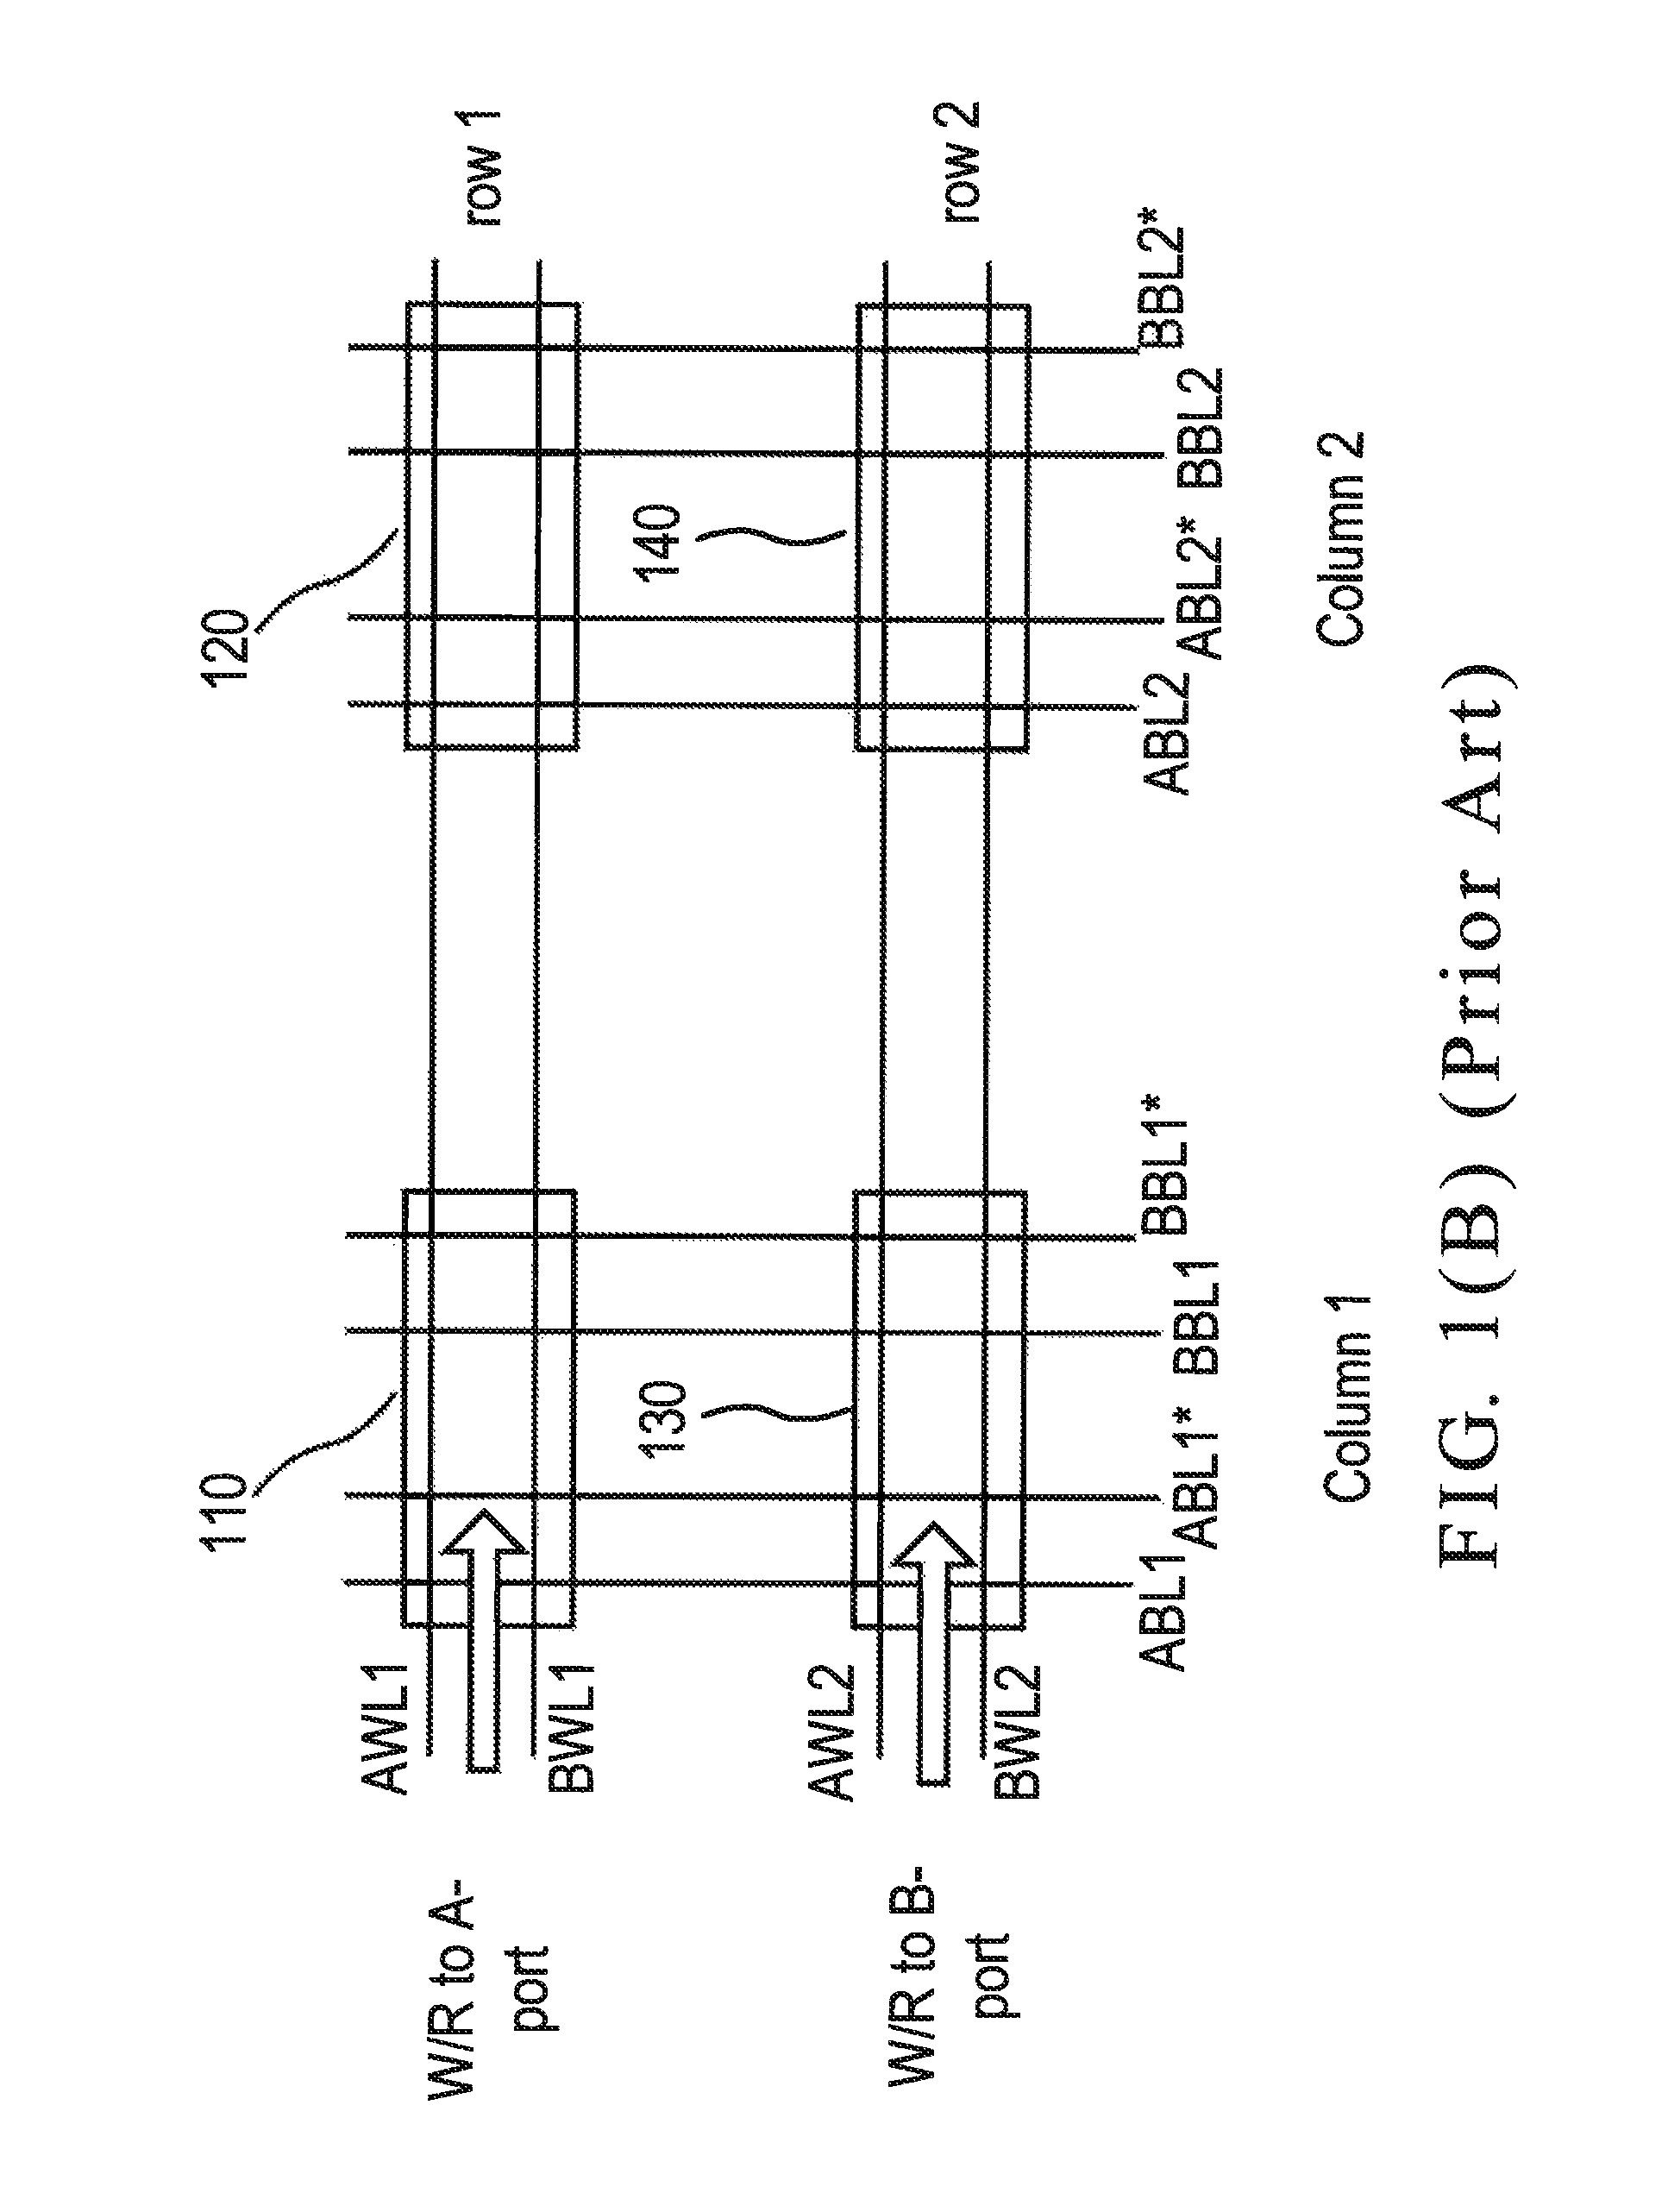 Ten-transistor dual-port SRAM with shared bit-line architecture